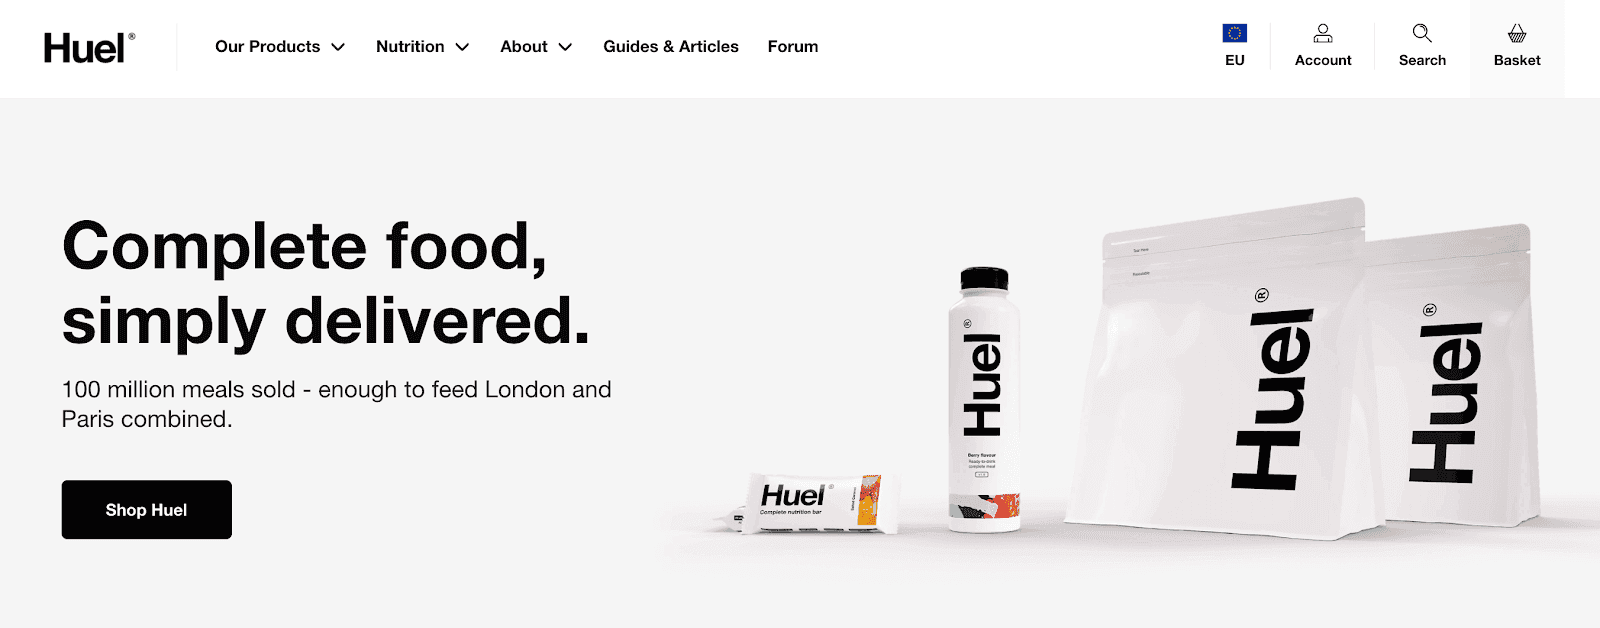 Huel homepage